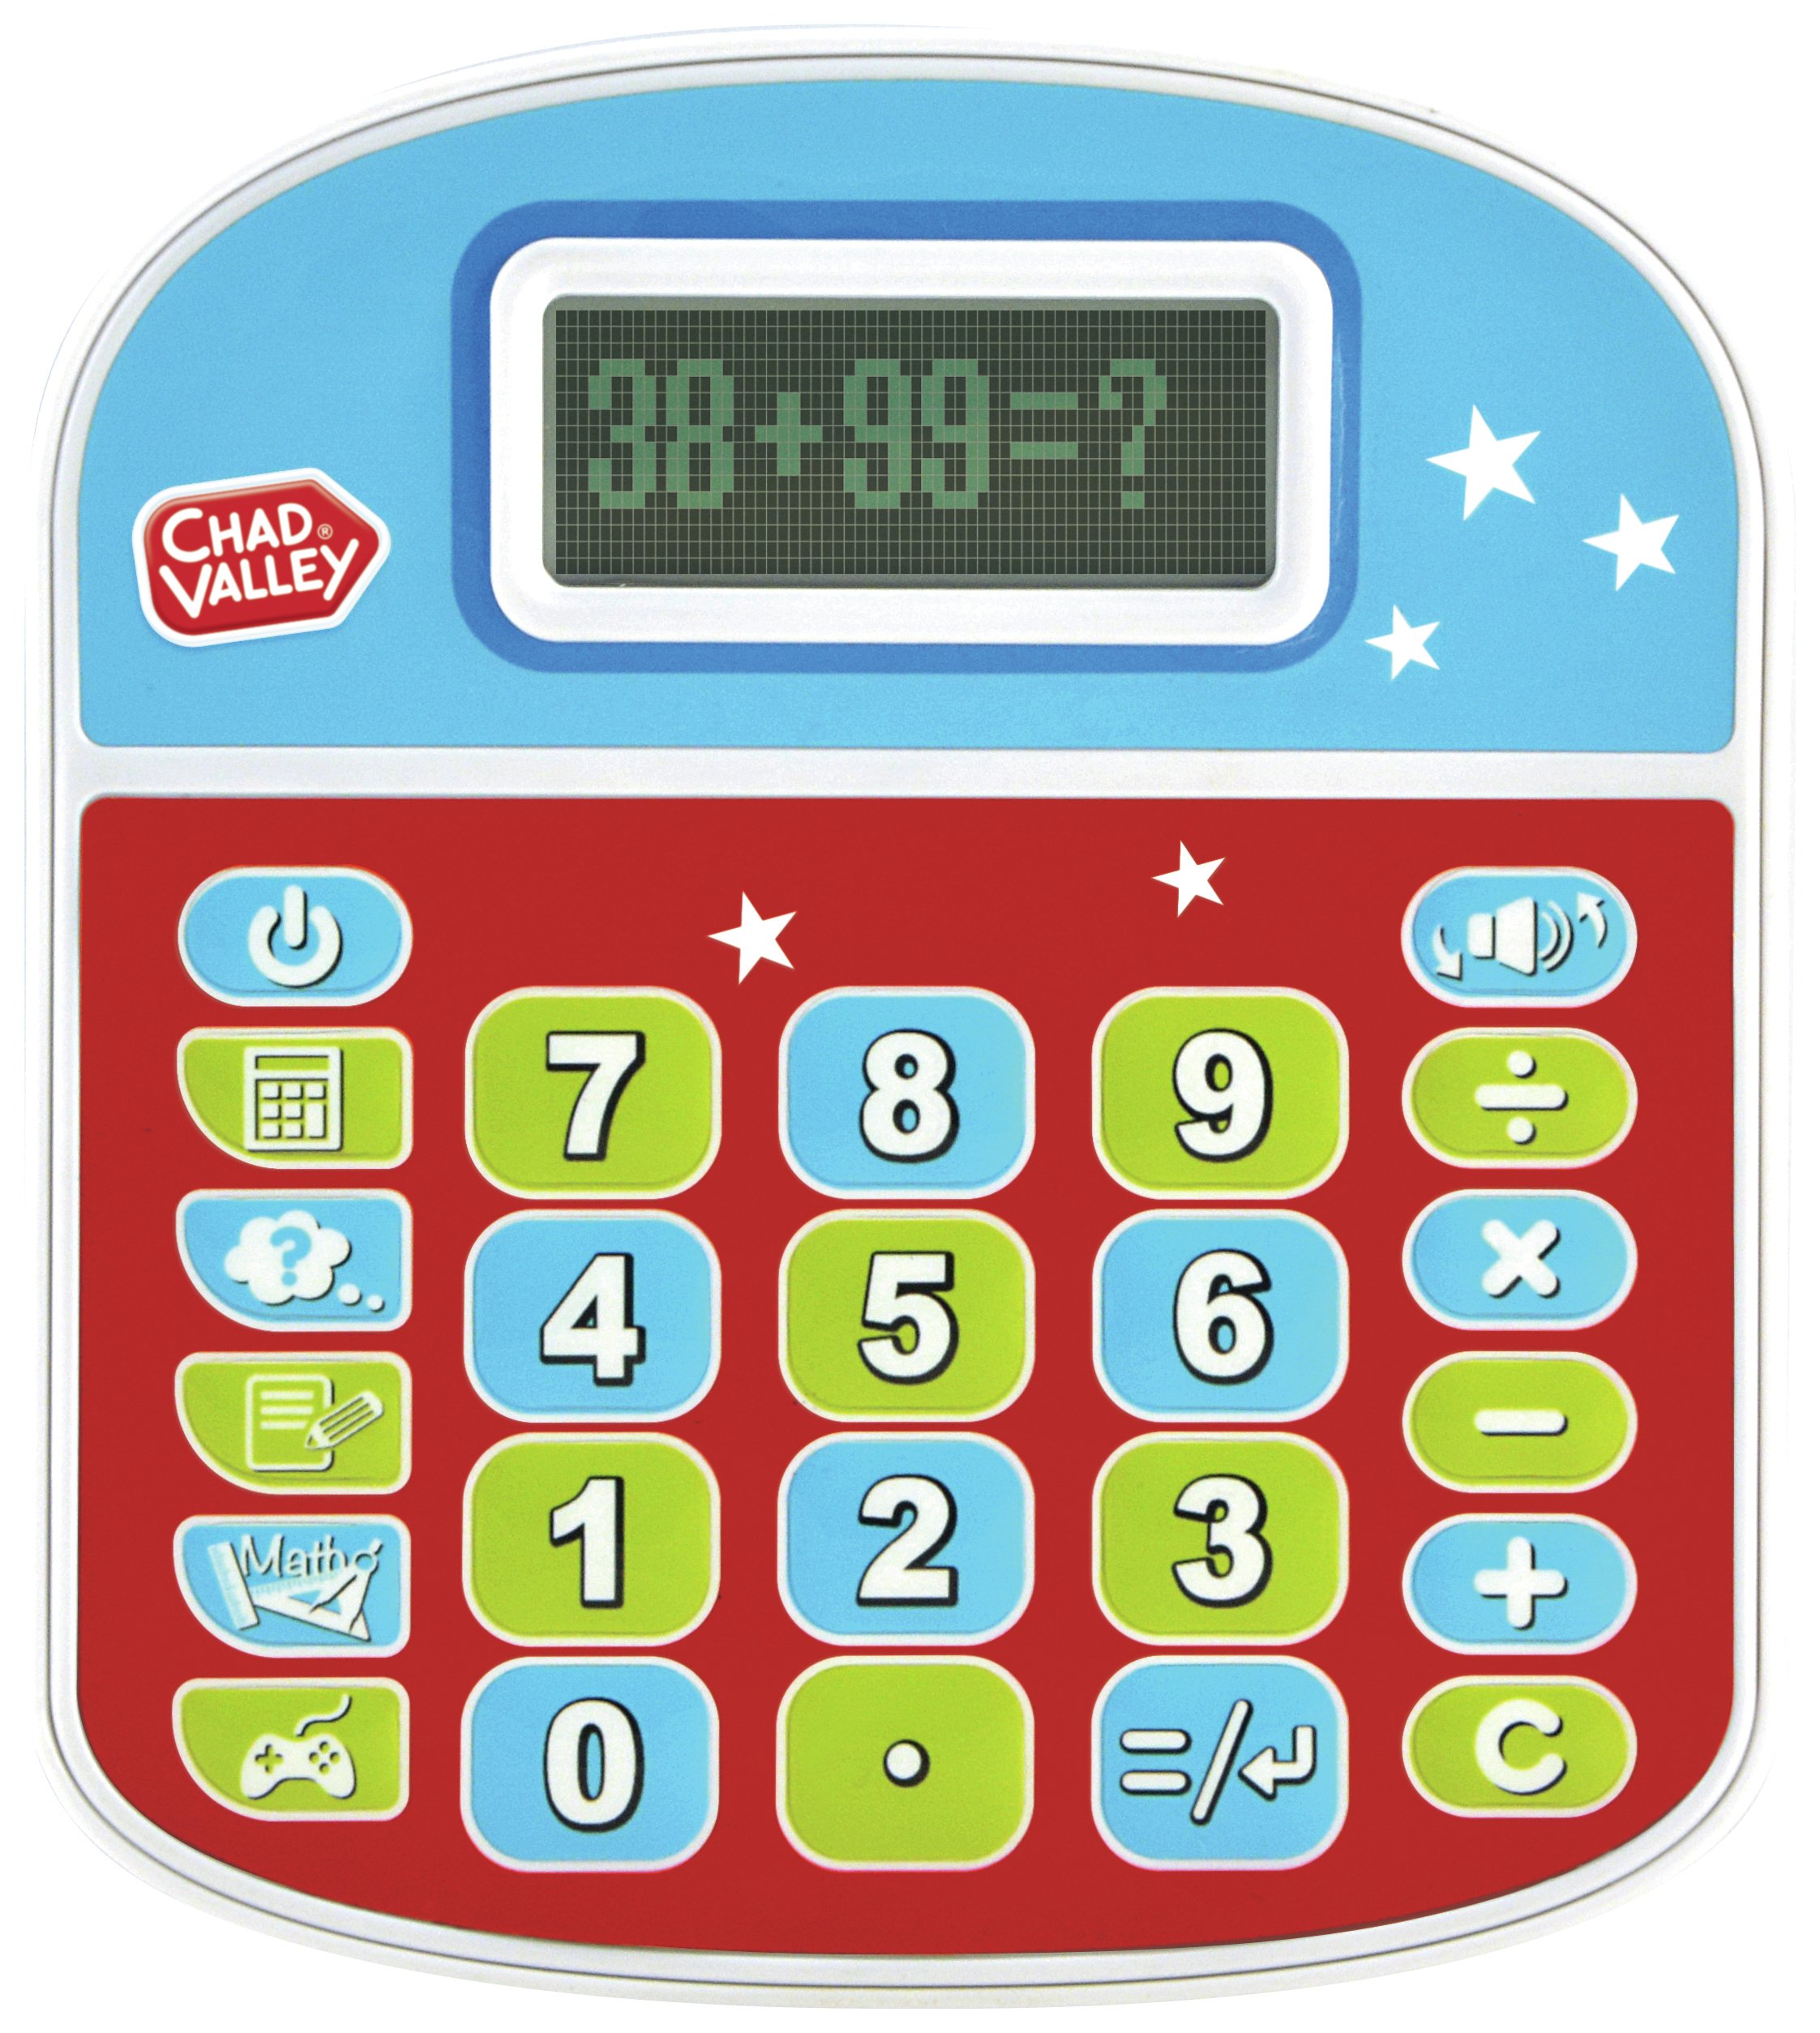 Chad Valley PlaySmart Calculator.